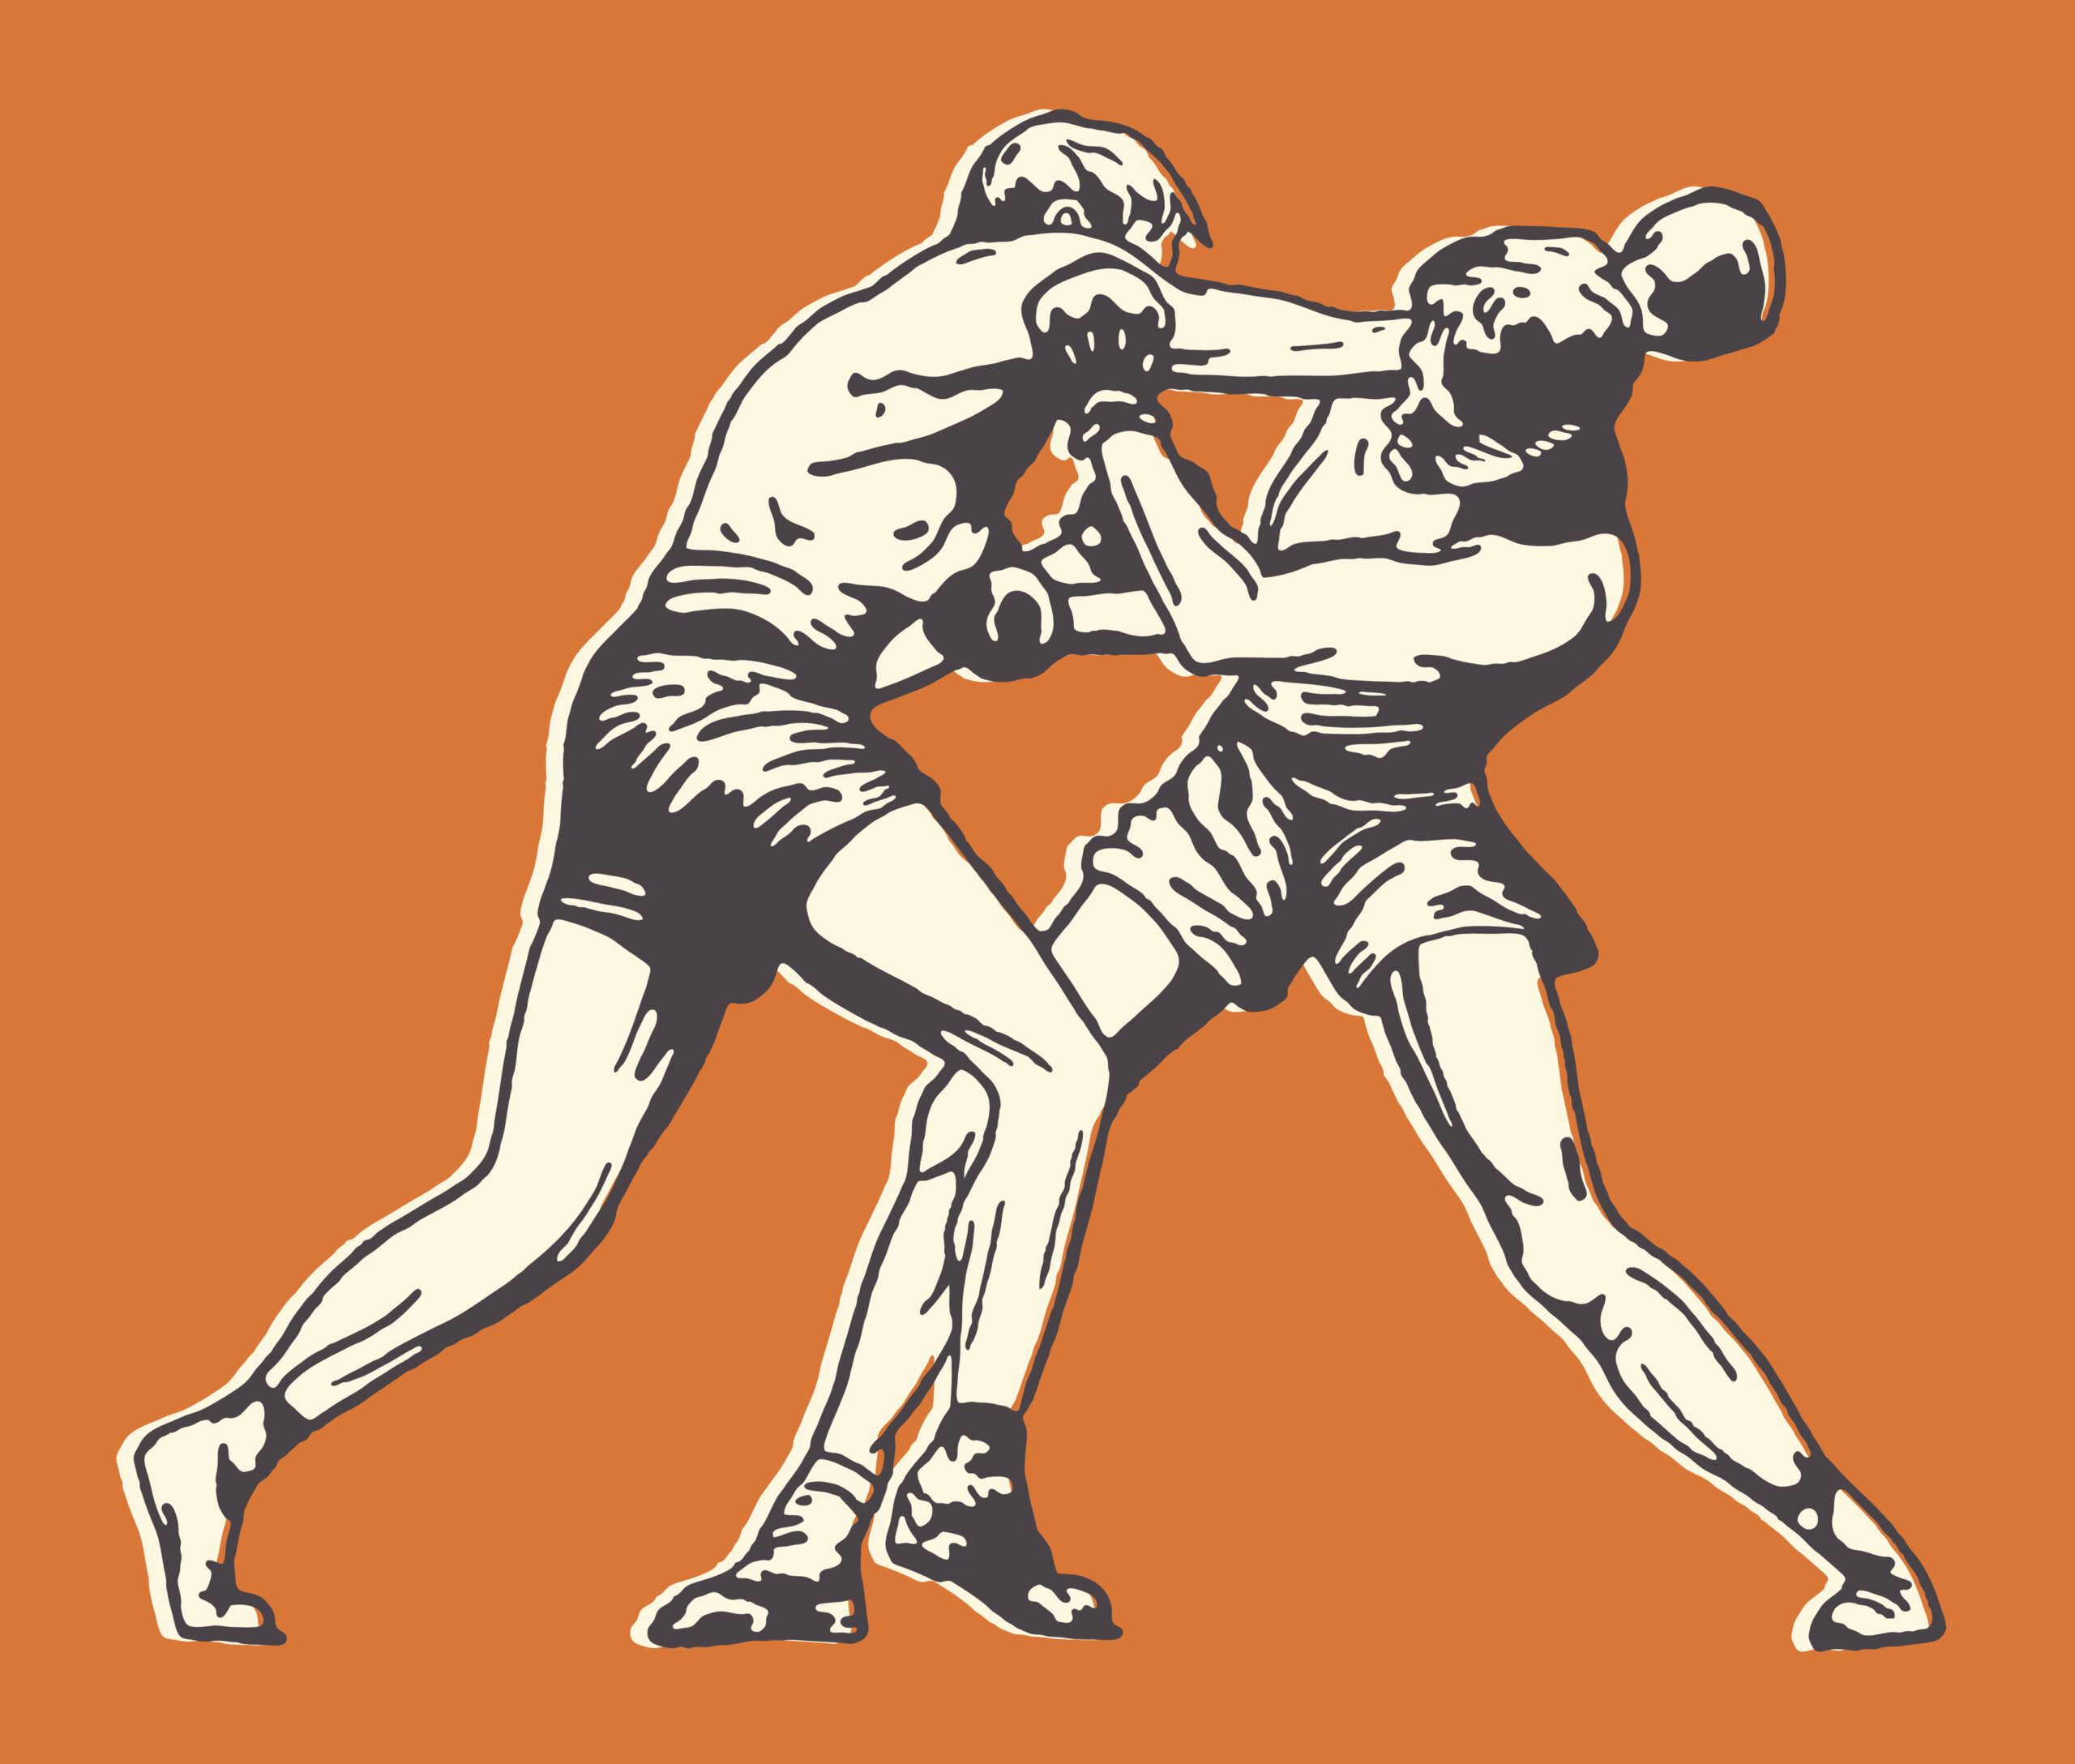 Two men boxing